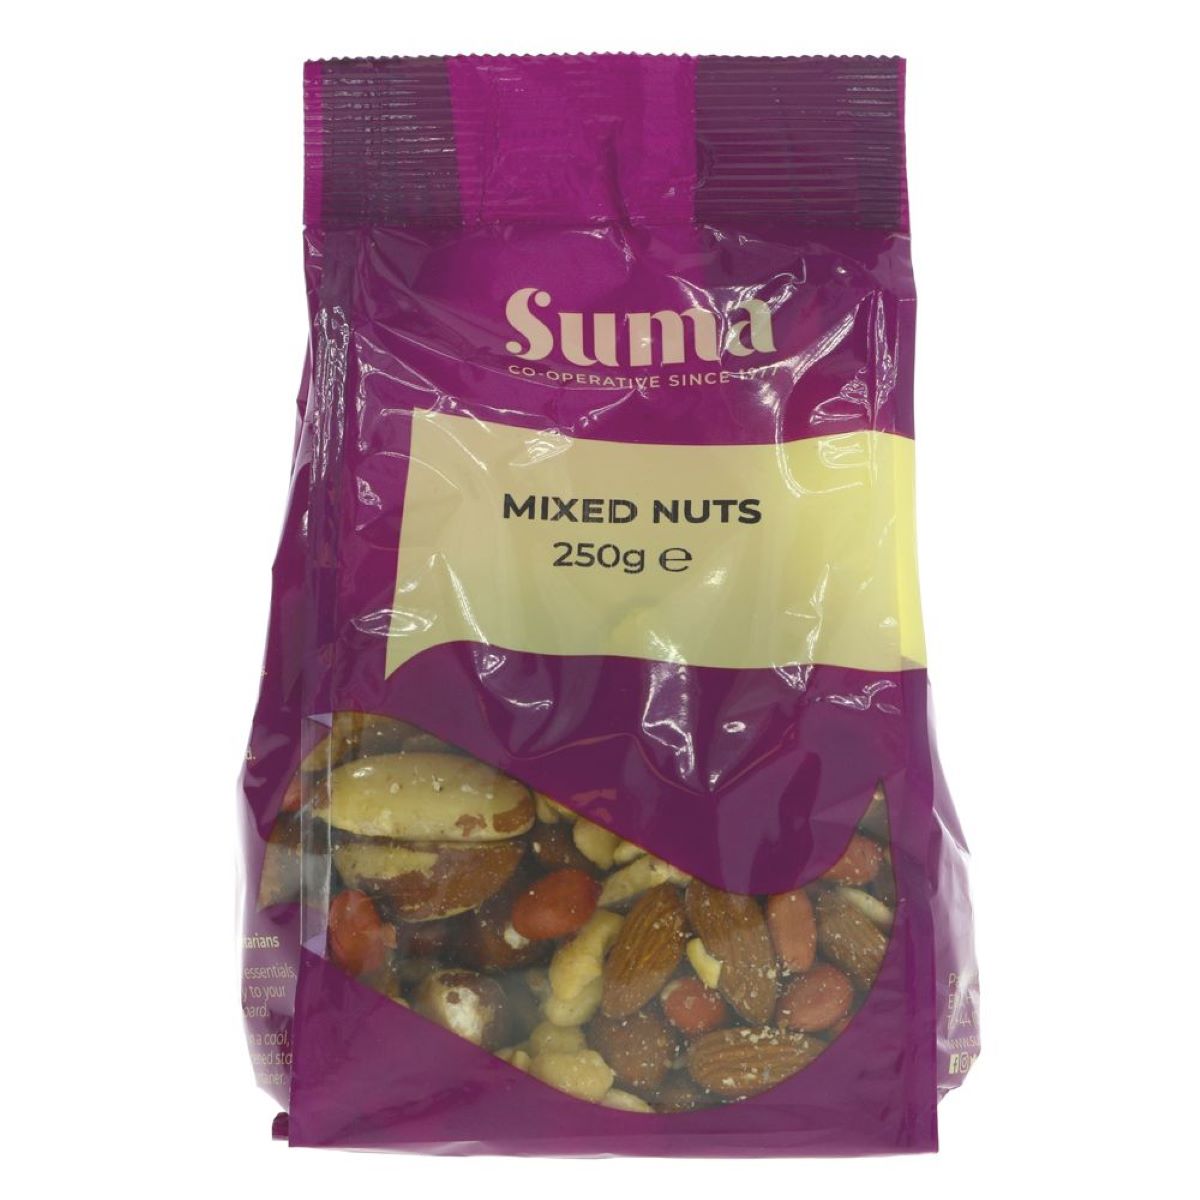 Suma Mixed nuts - 250g